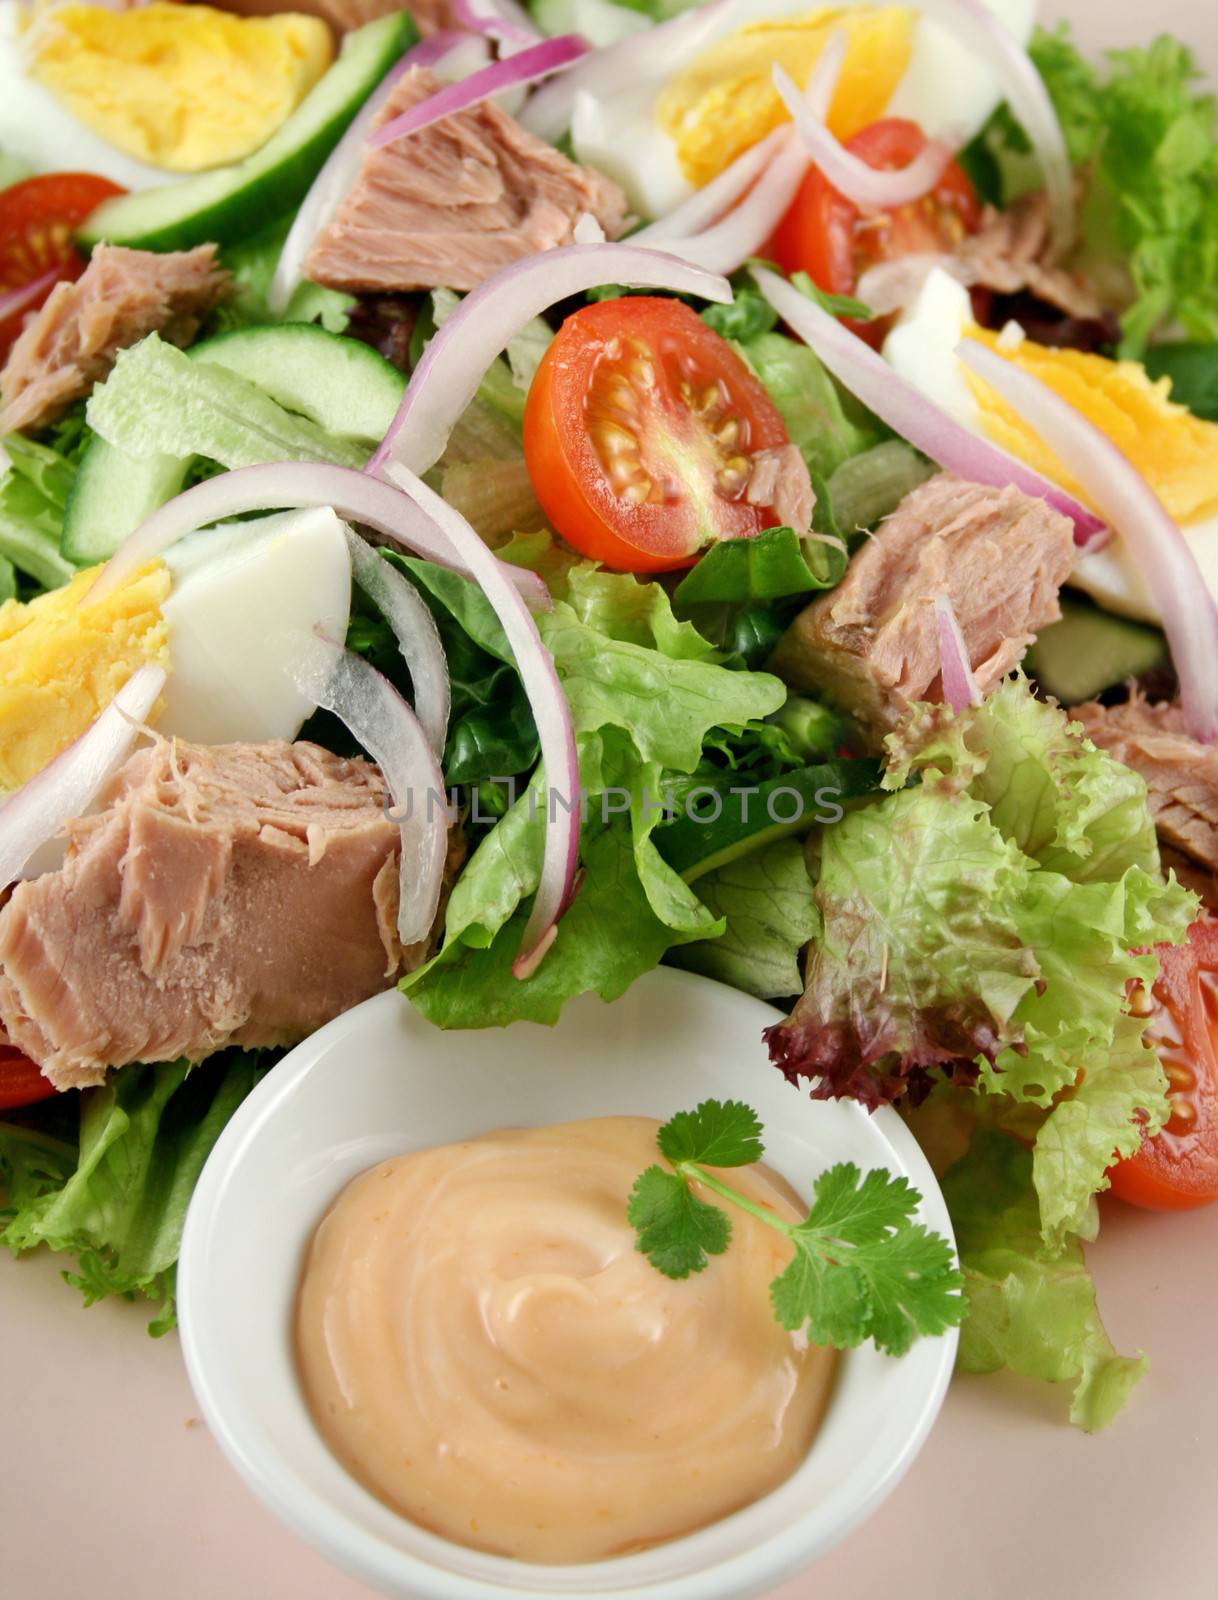 Tuna Salad And Dip by jabiru